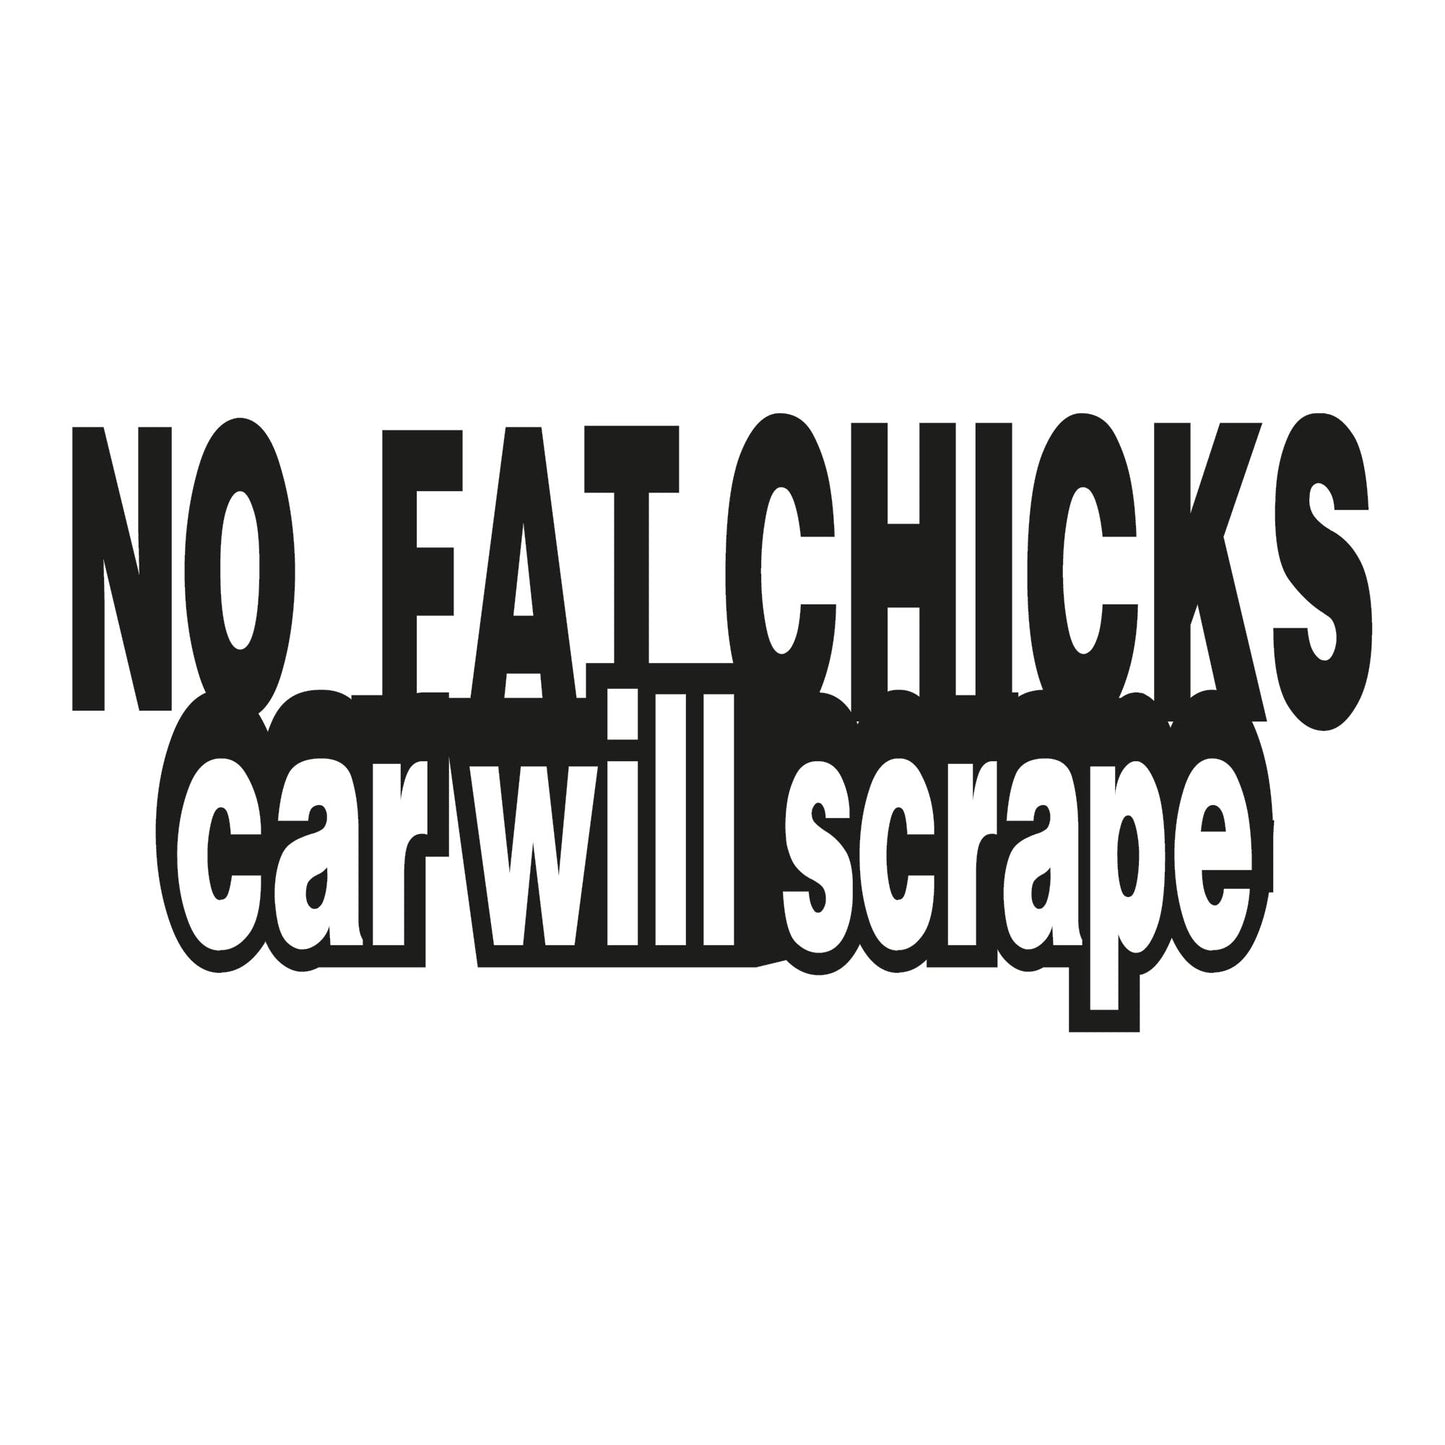 Autoaufkleber - No fat chicks car will scrape - 210x100mm